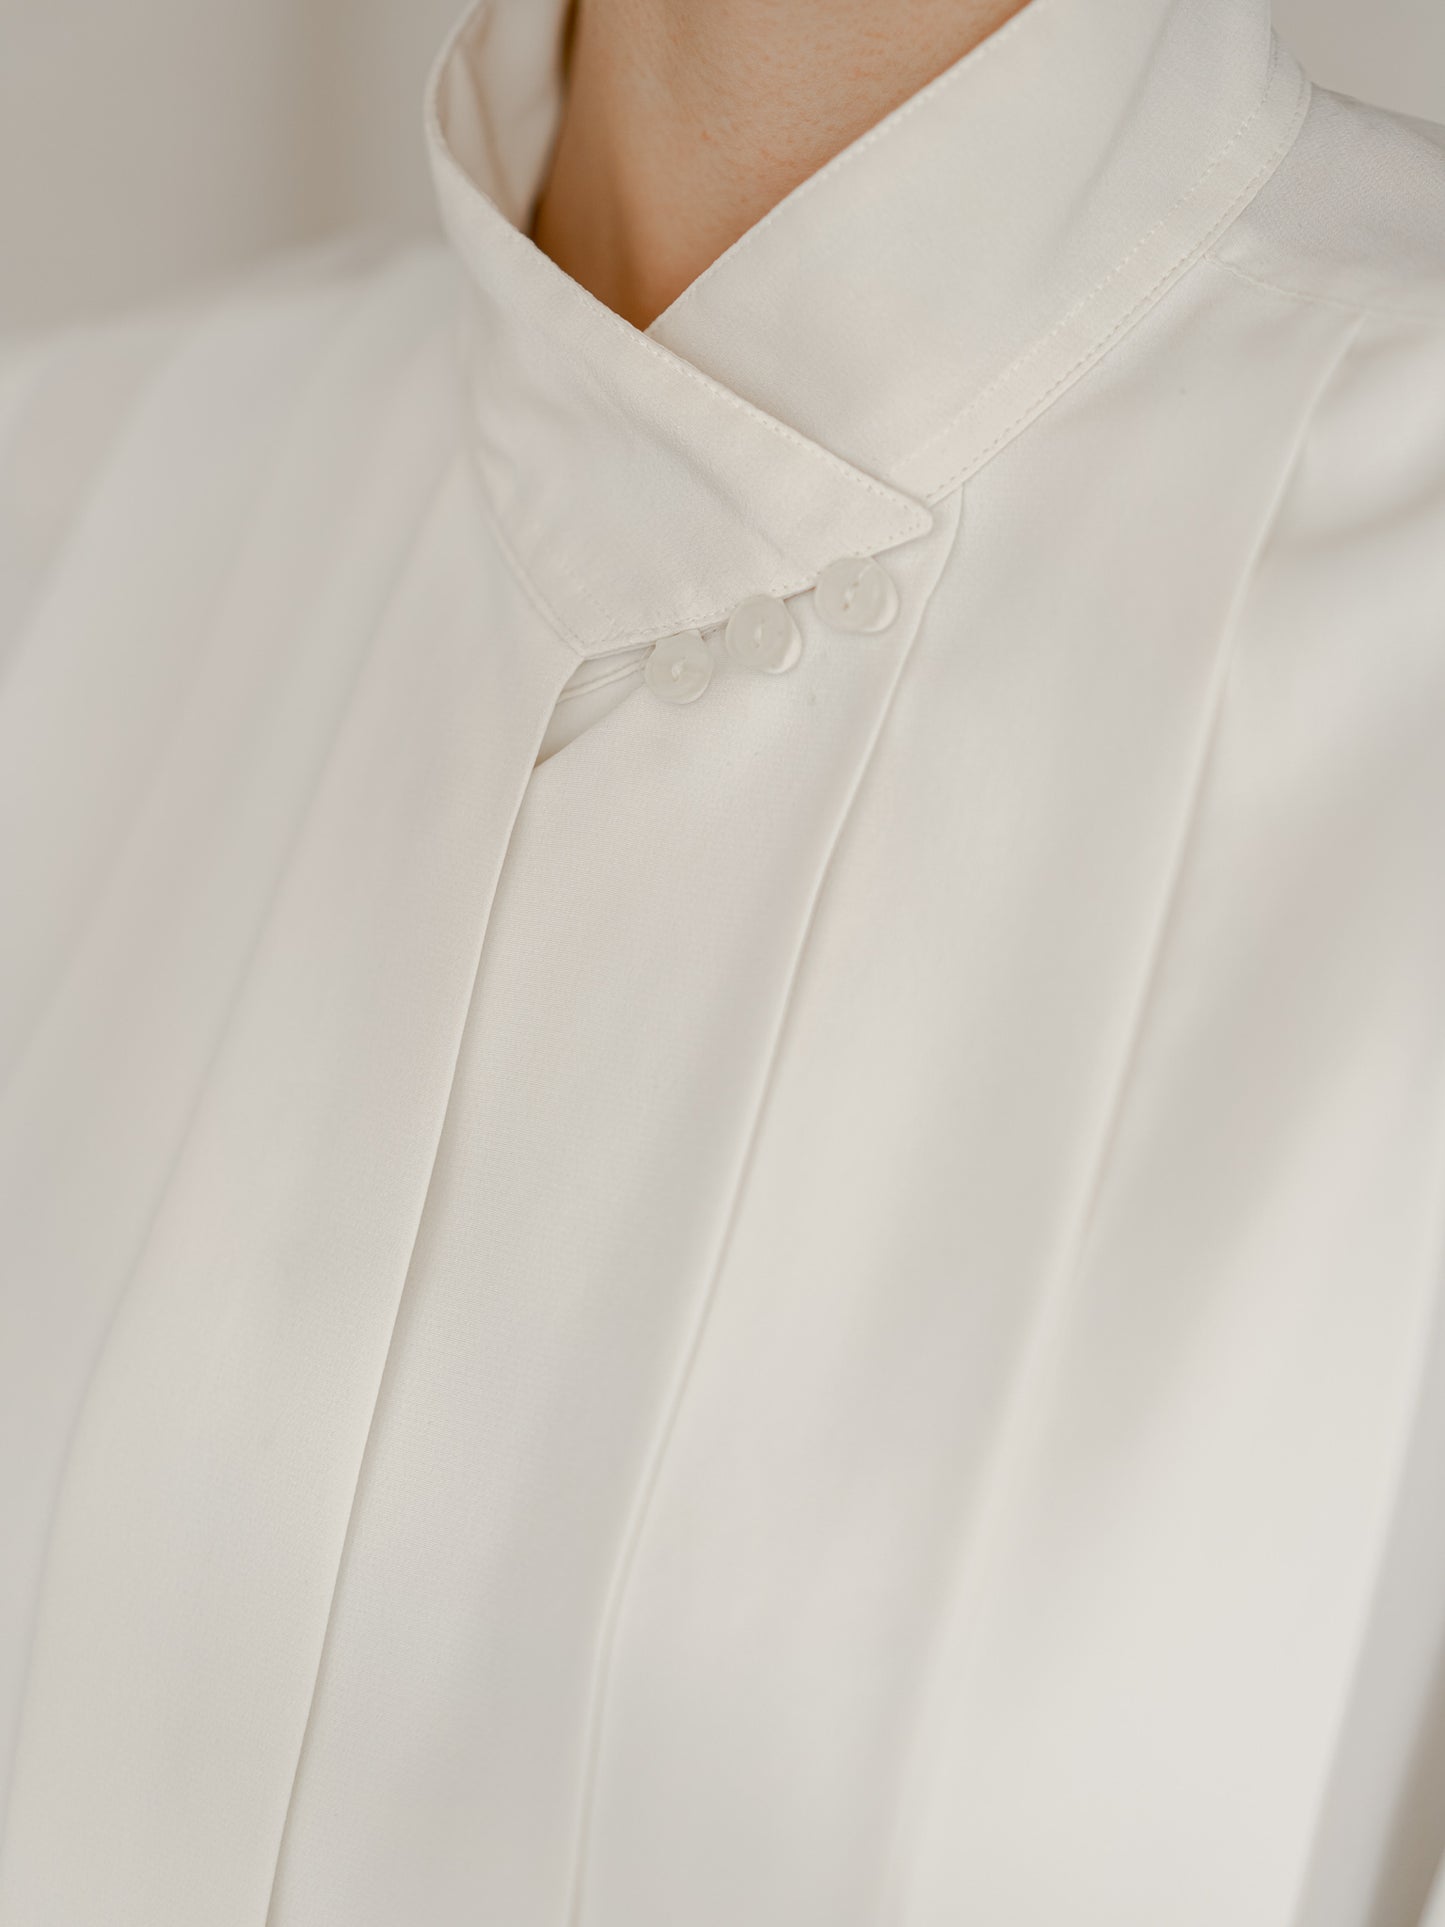 Vintage 80's Cream White Collar Blouse (M)